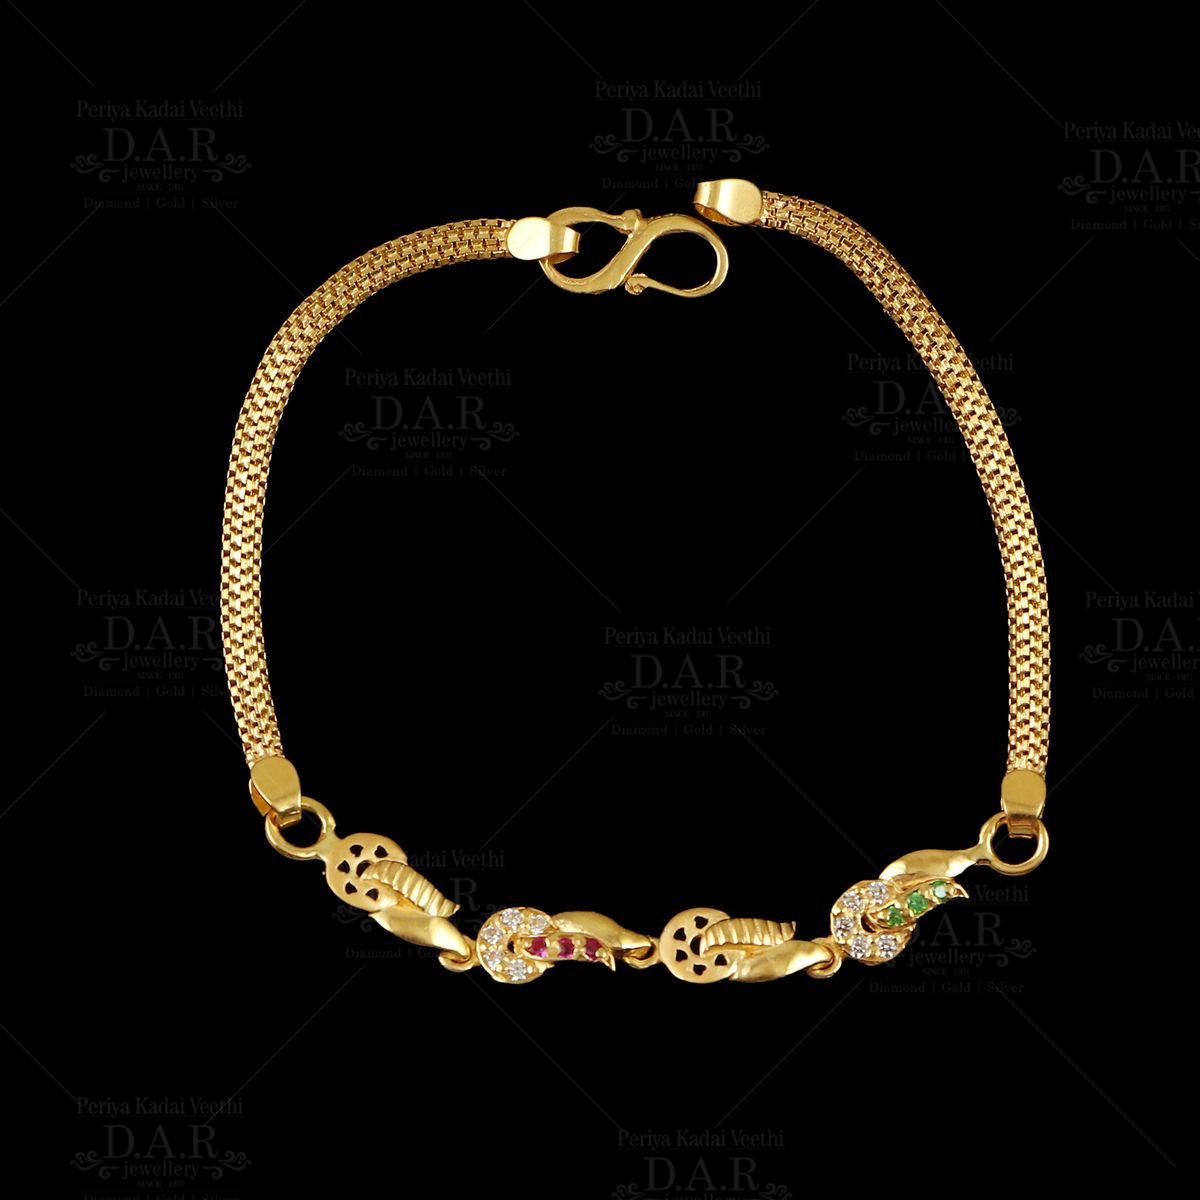 18k Gold Filled 4mm Rope Bracelet Wholesale Bracelet Jewelry Making